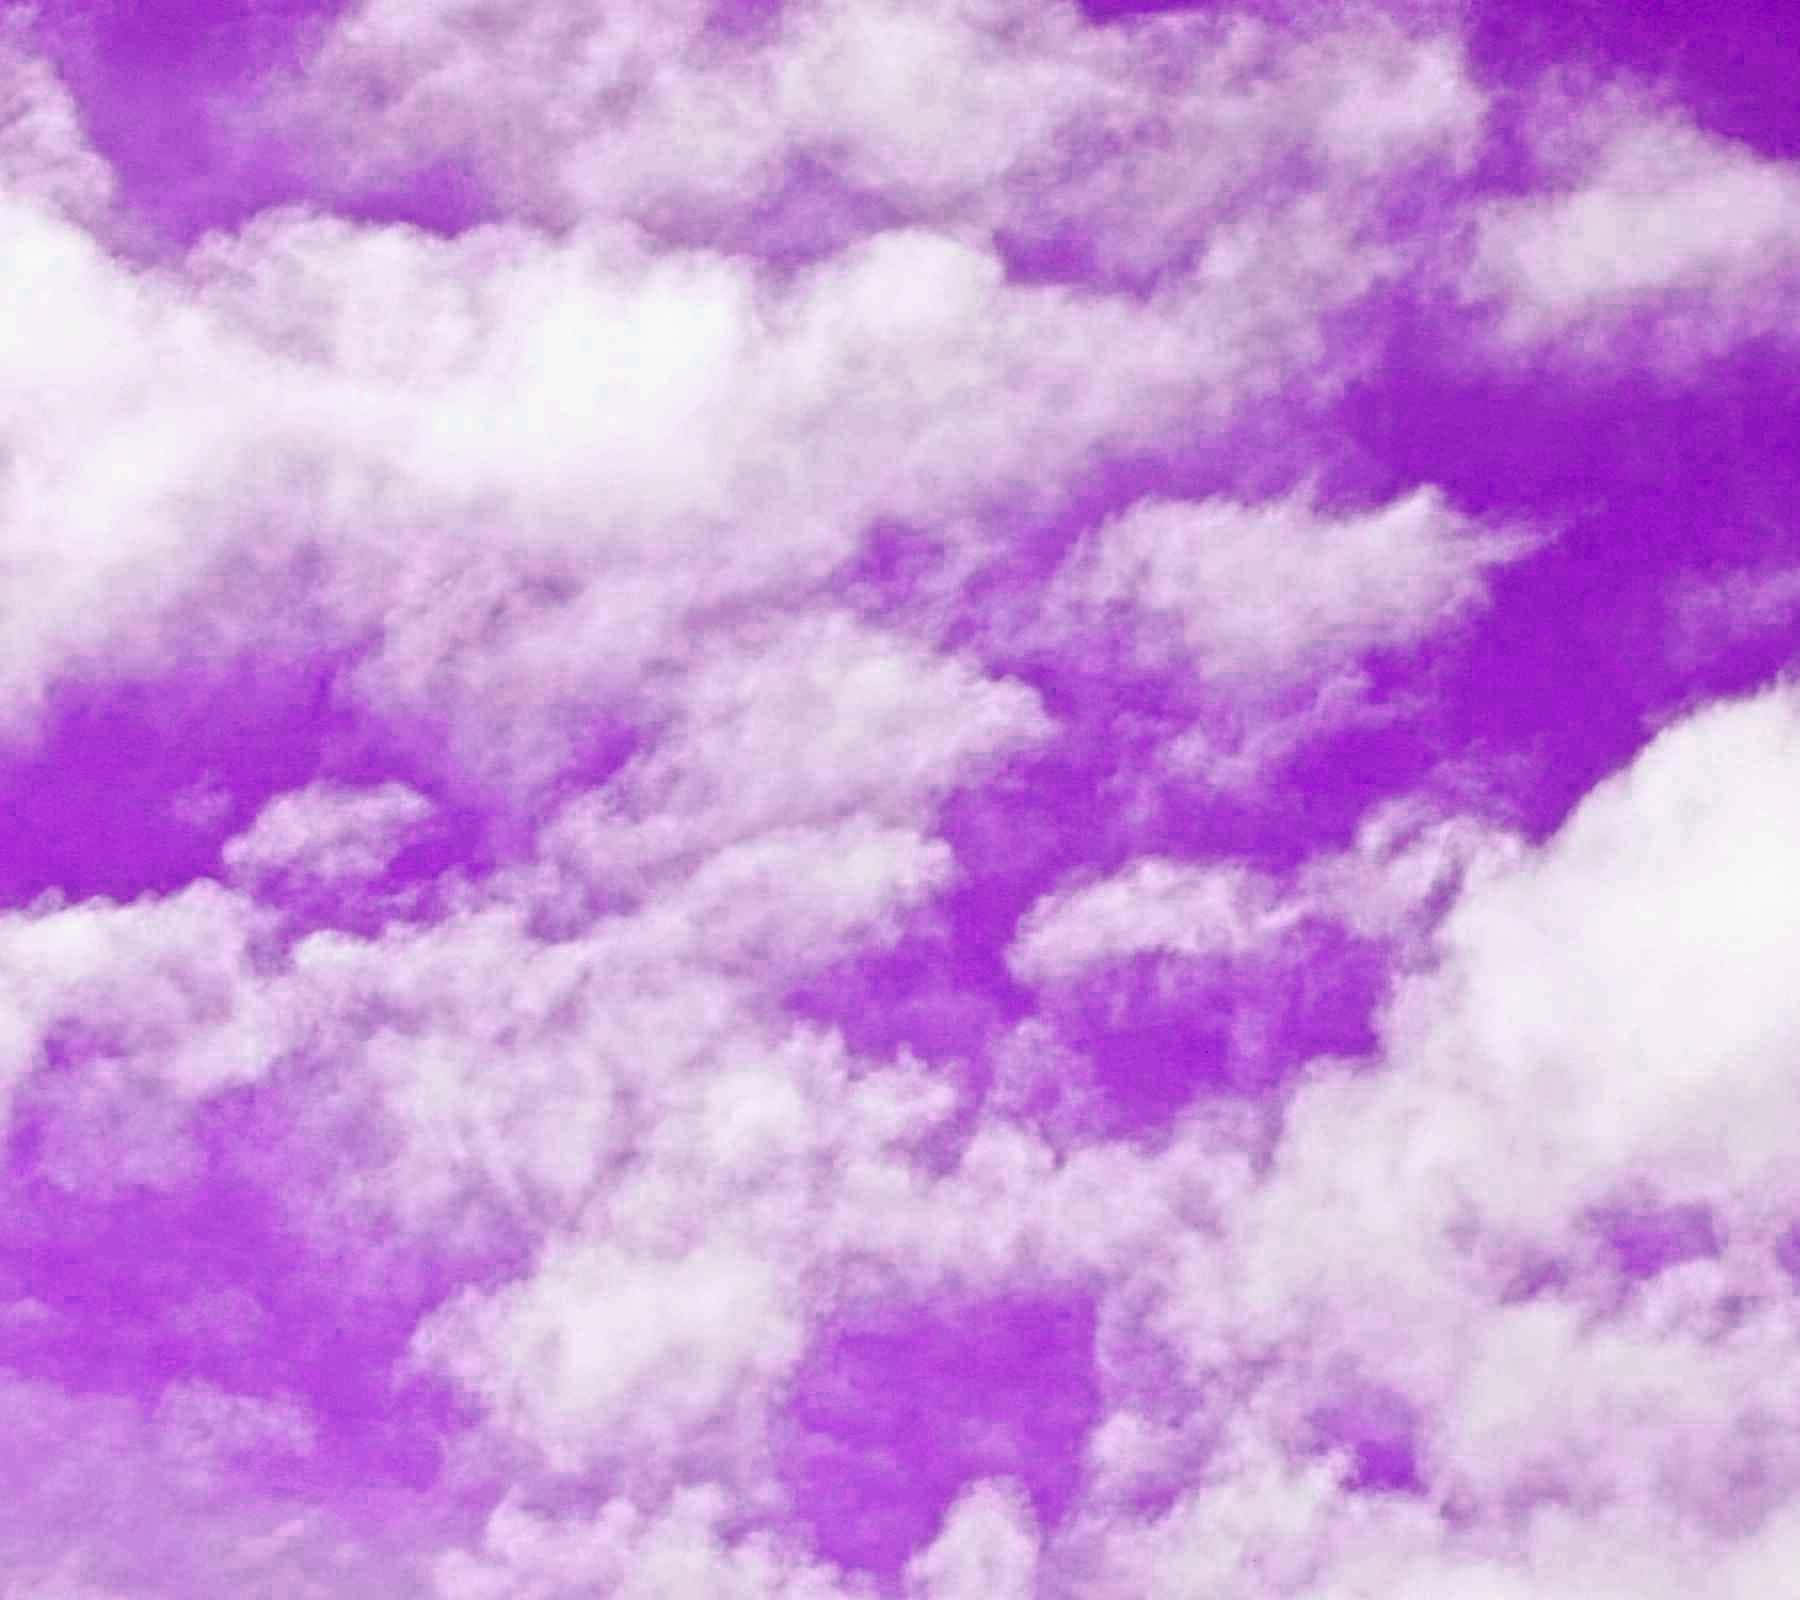 Caption: Dreamy Purple Clouds Background